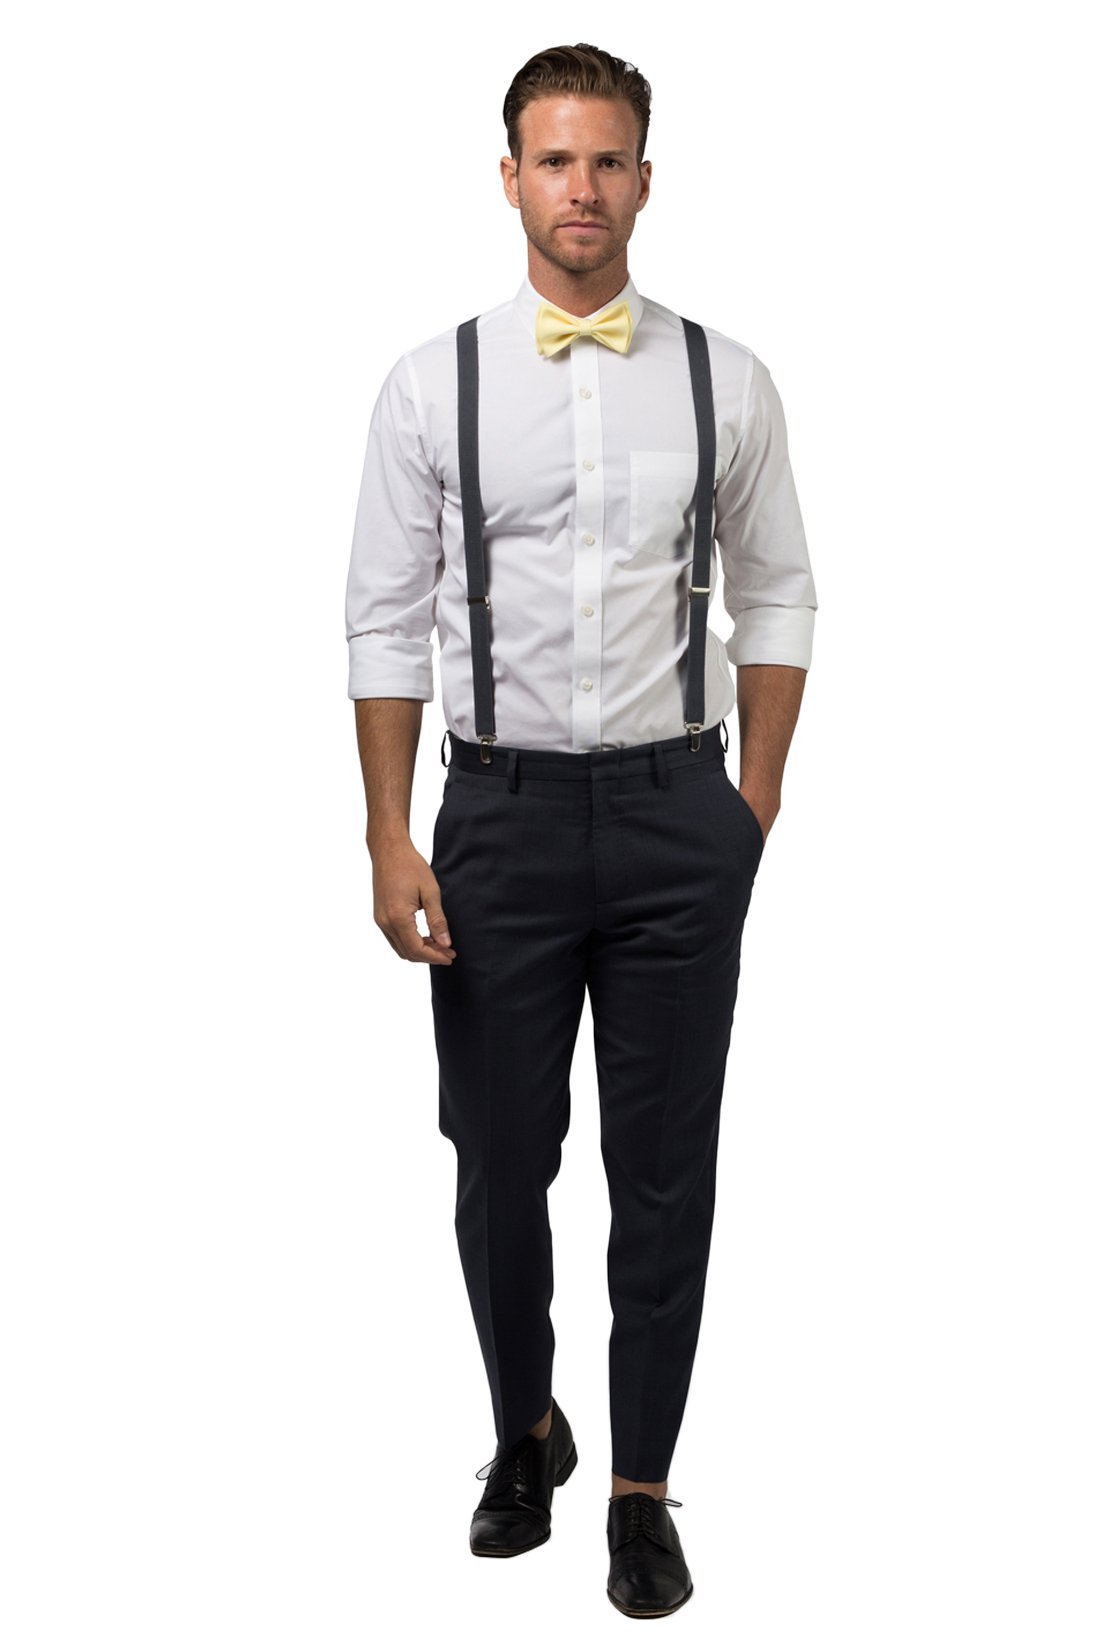 Charcoal Grey Suspenders & Yellow Bow Tie - Baby to Adult Sizes– Armoniia